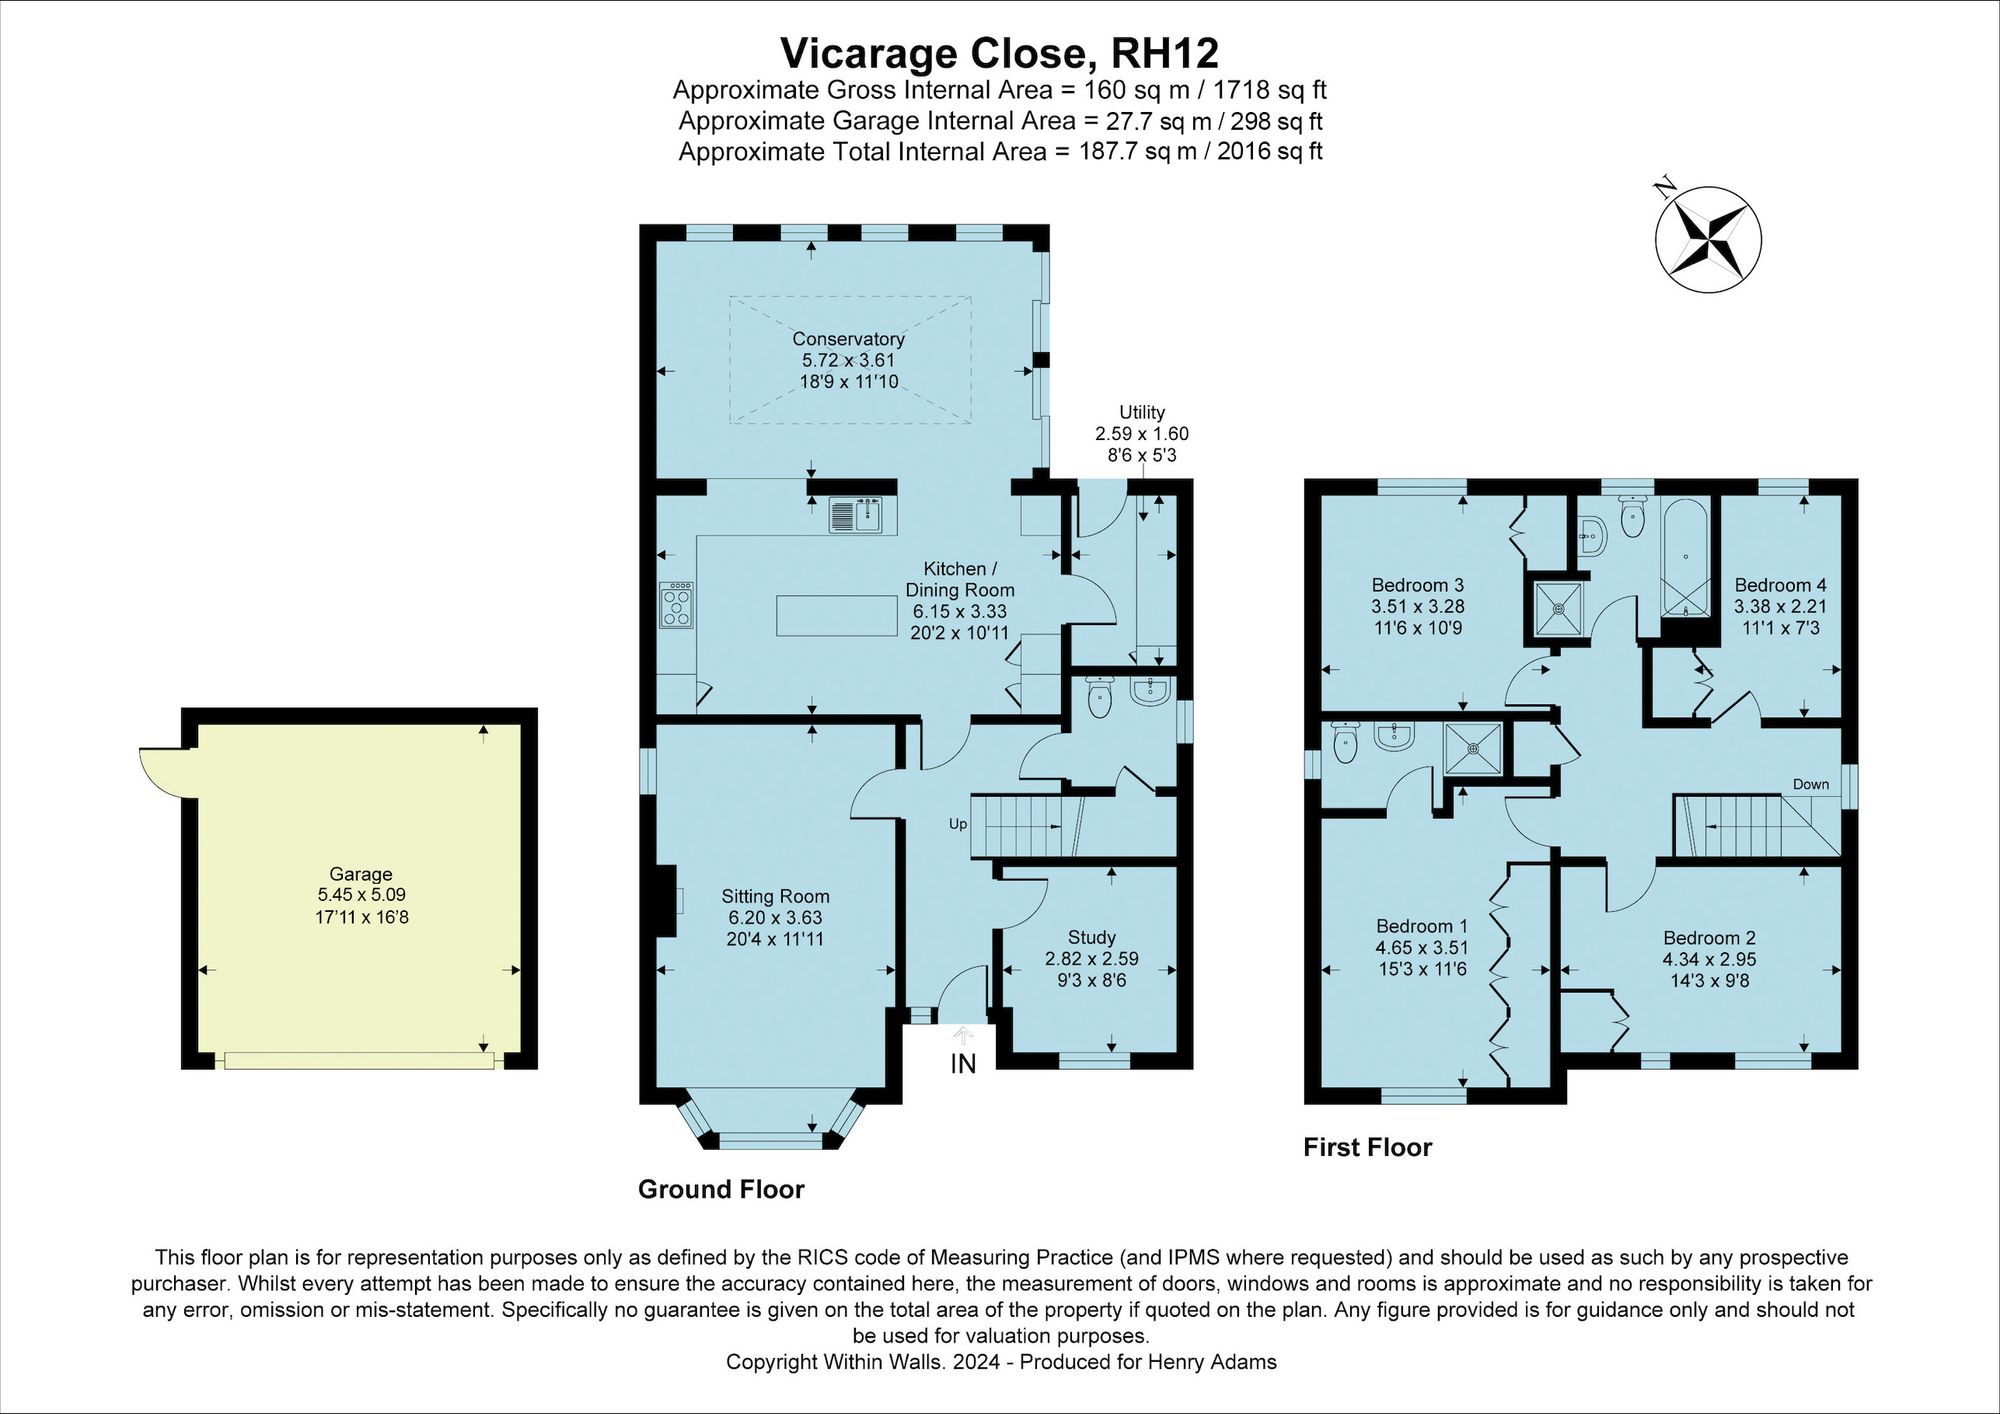 Vicarage Close, Colgate, RH12 floorplans